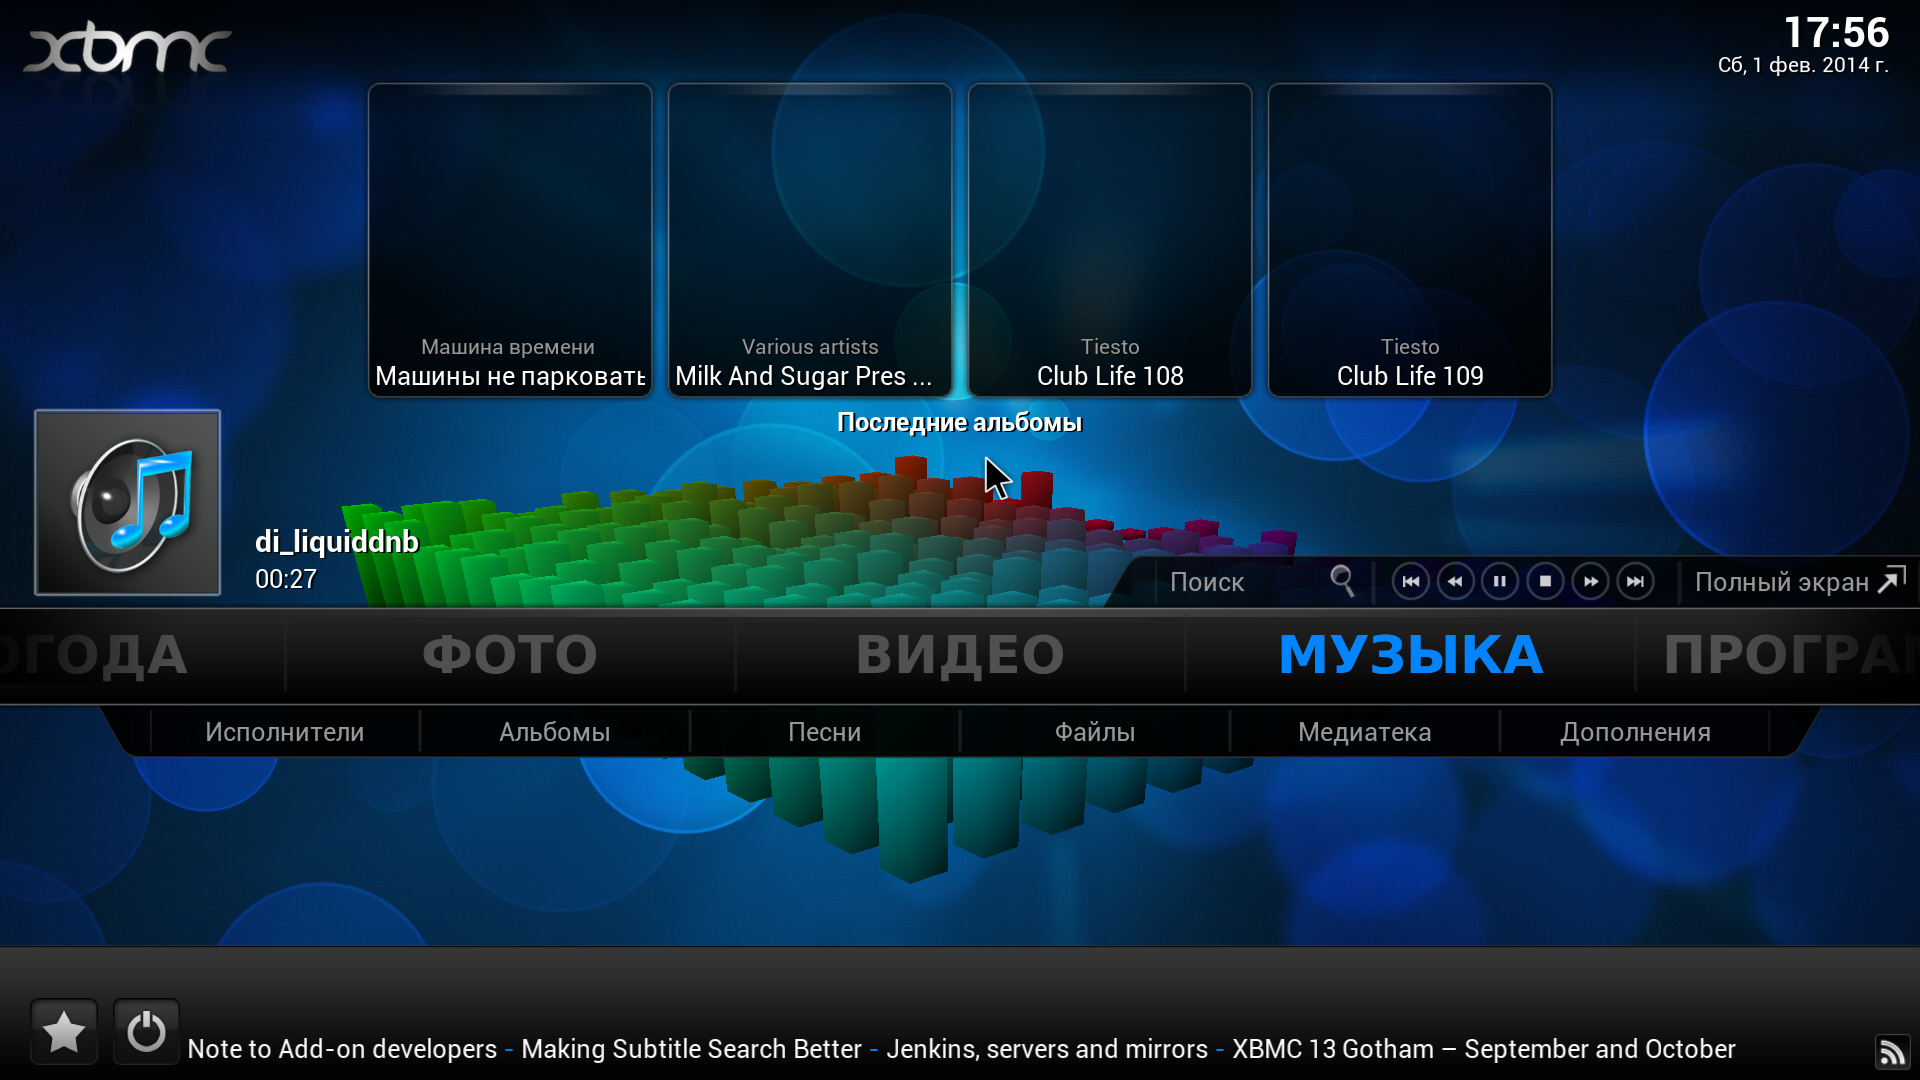 Интерфейс XBMC с визуализацией музыки на заднем плане